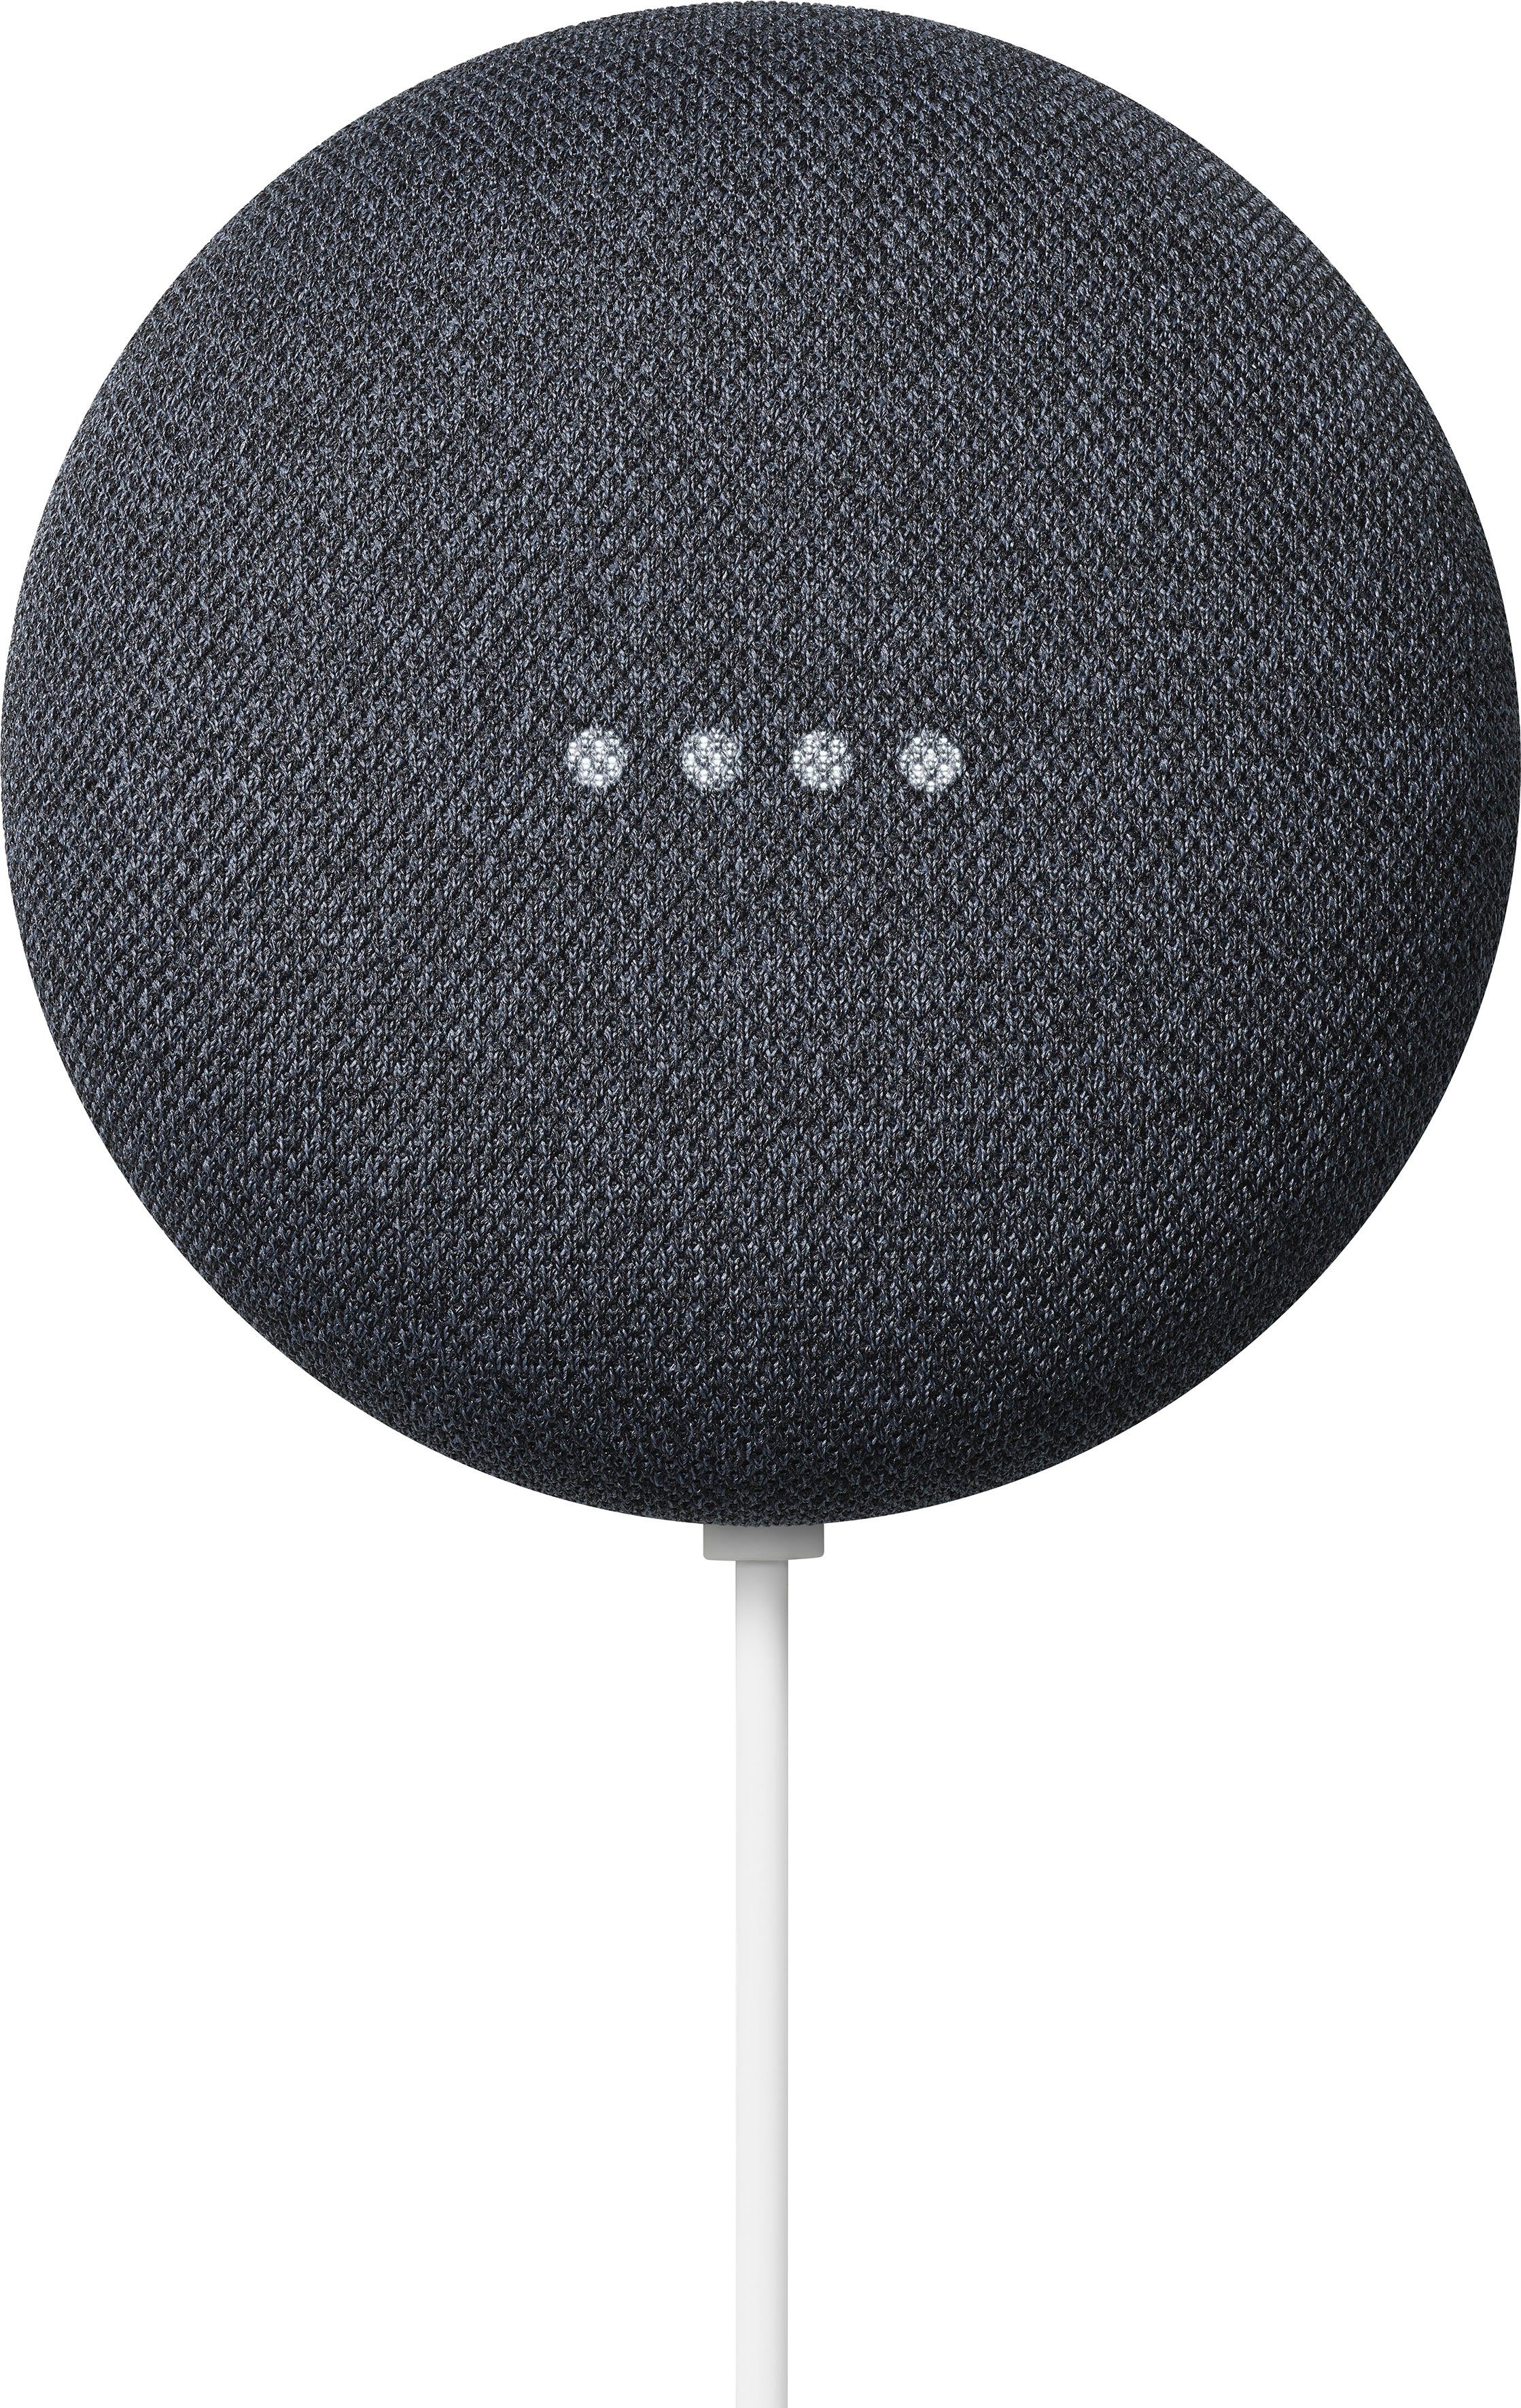 Google Nest Mini (2. Generation) Smart Speaker (Bluetooth, WLAN (WiFi) Carbon